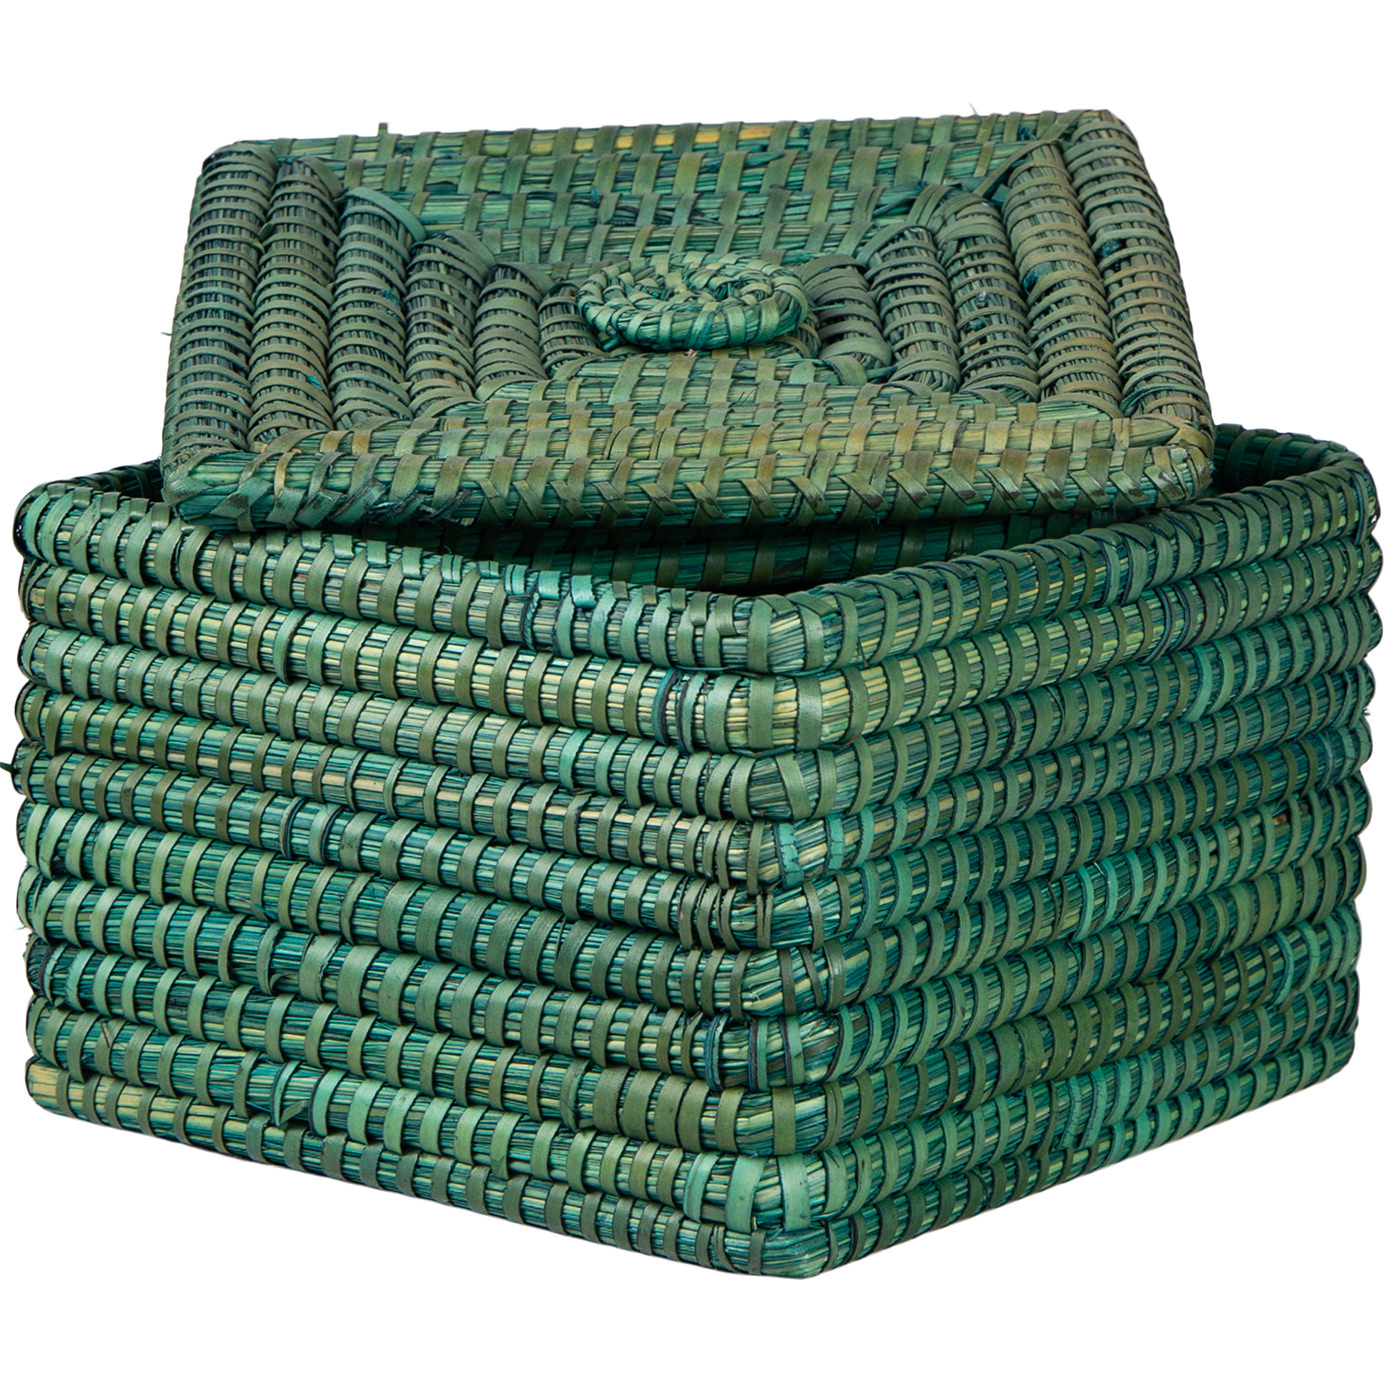 5Q 1099 061 3 – Sea Grass Square Box Turquoise L (2)